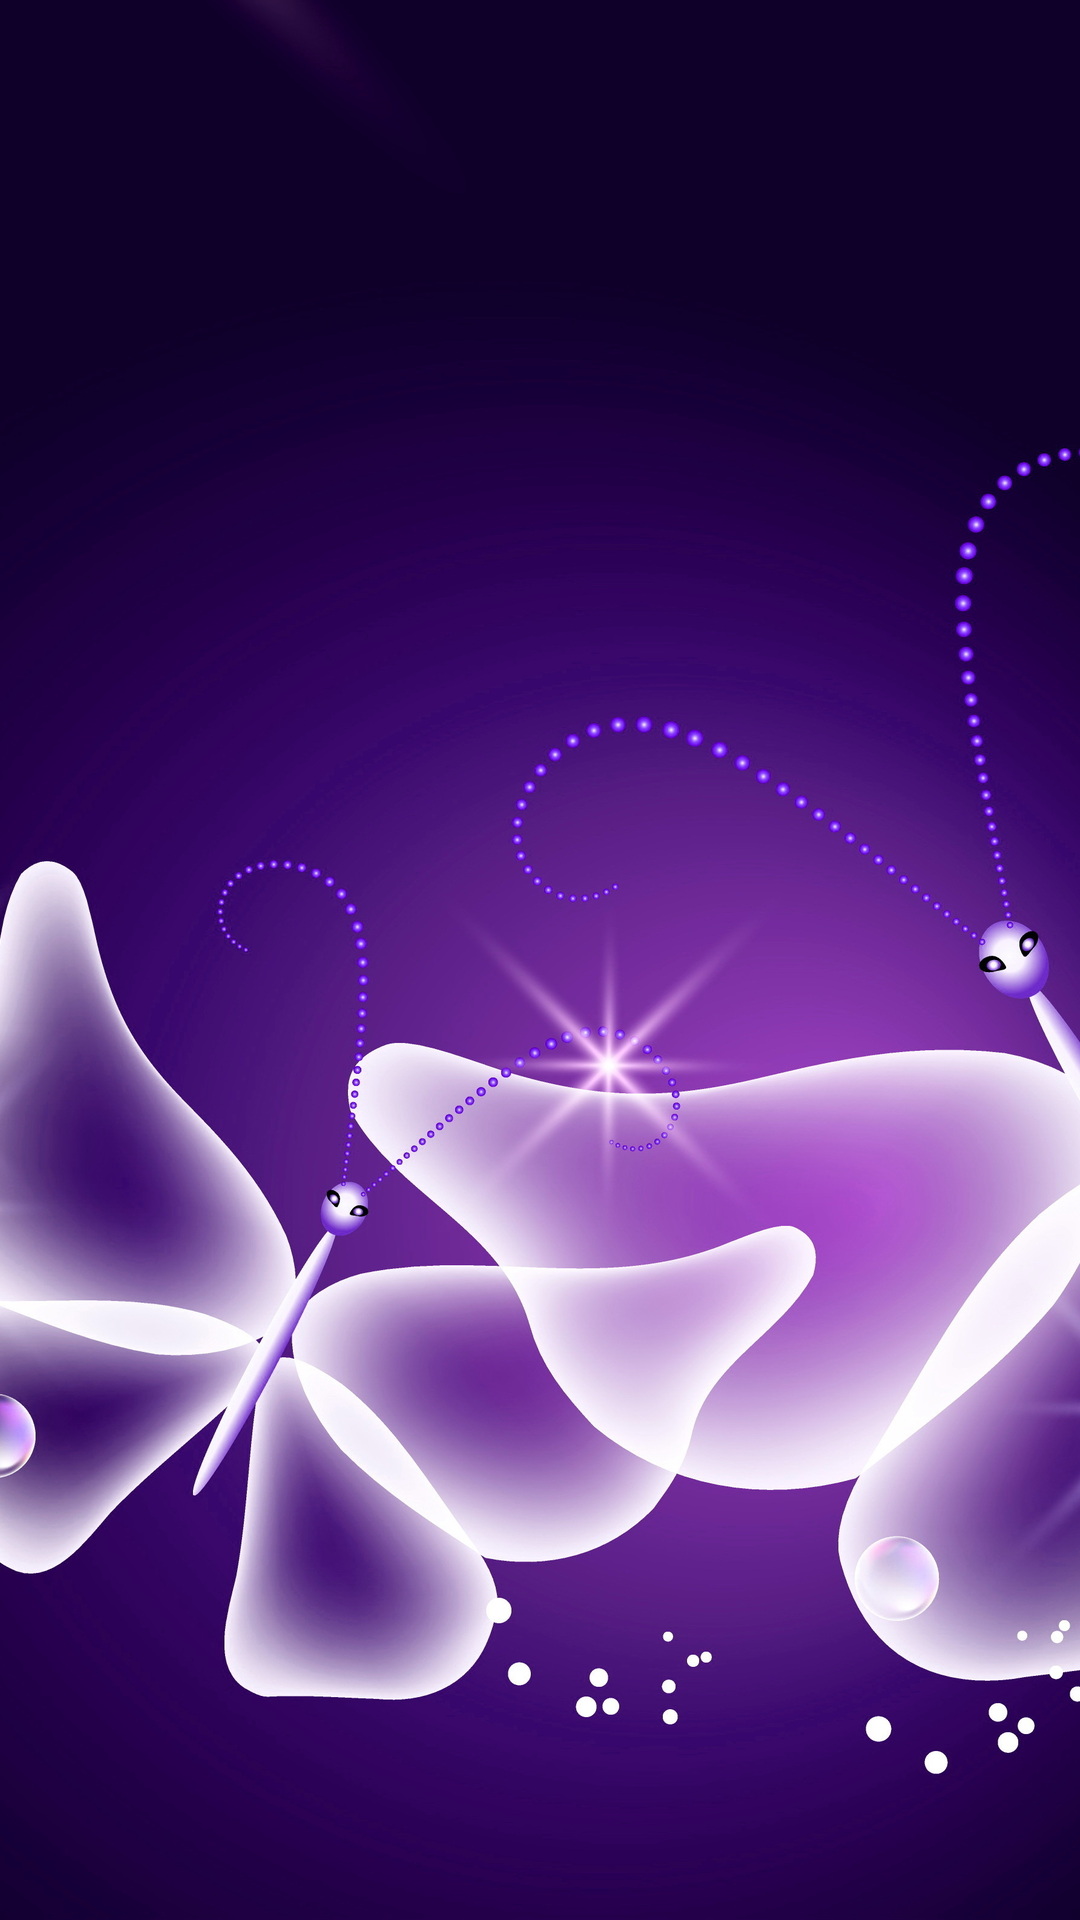 Sparkle, Neon, Butterfly, Glow, Butterflies, Abstract, - Sparkle Purple Butterfly Background - HD Wallpaper 